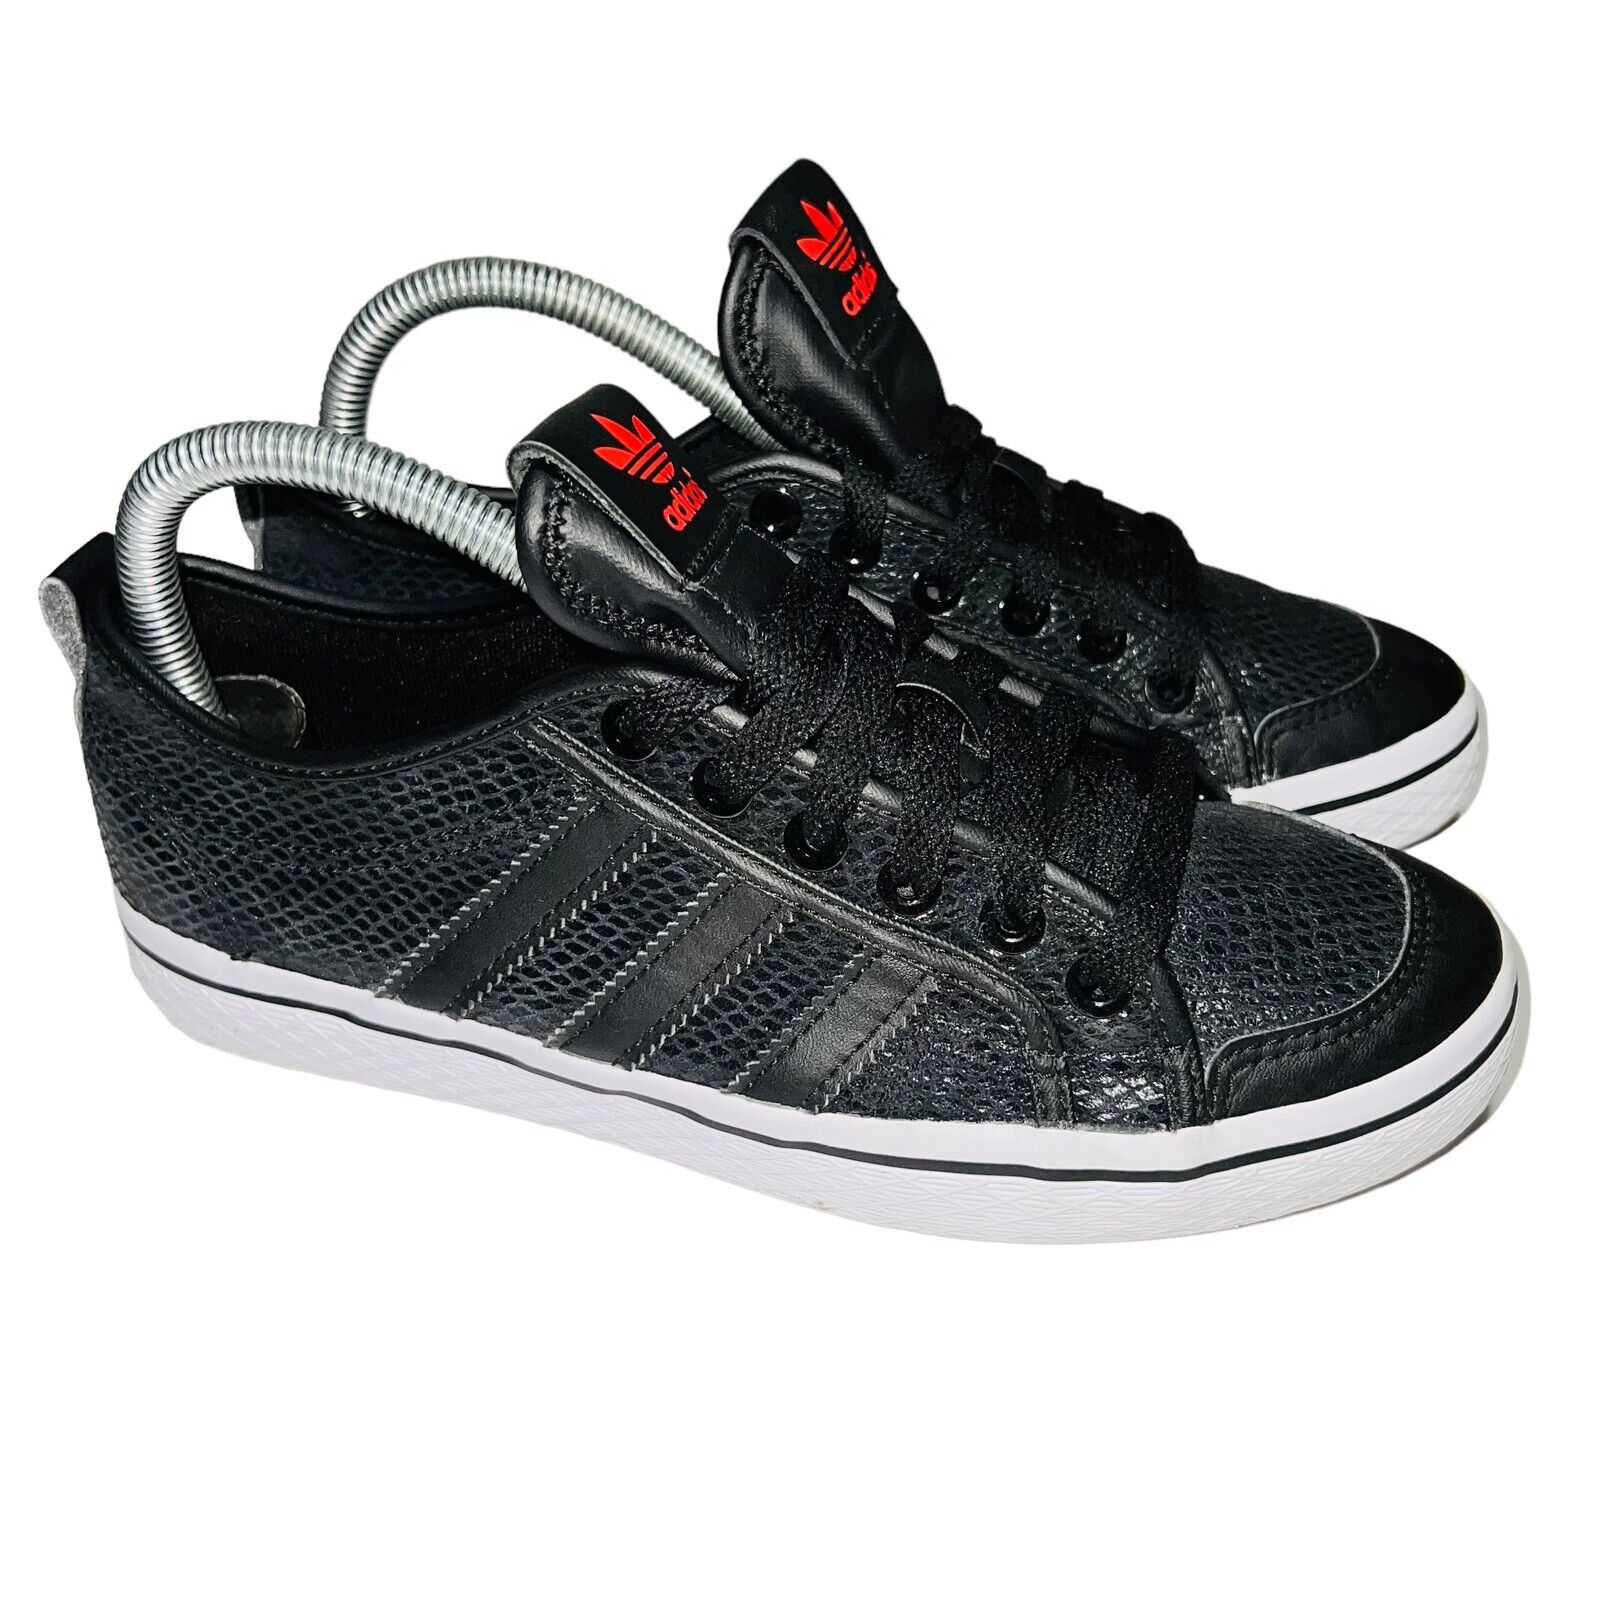 Ved navn prosa myg adidas Originals Honey Low Women's Size 6.5 Shoes Black Snake Print  Sneakers | eBay